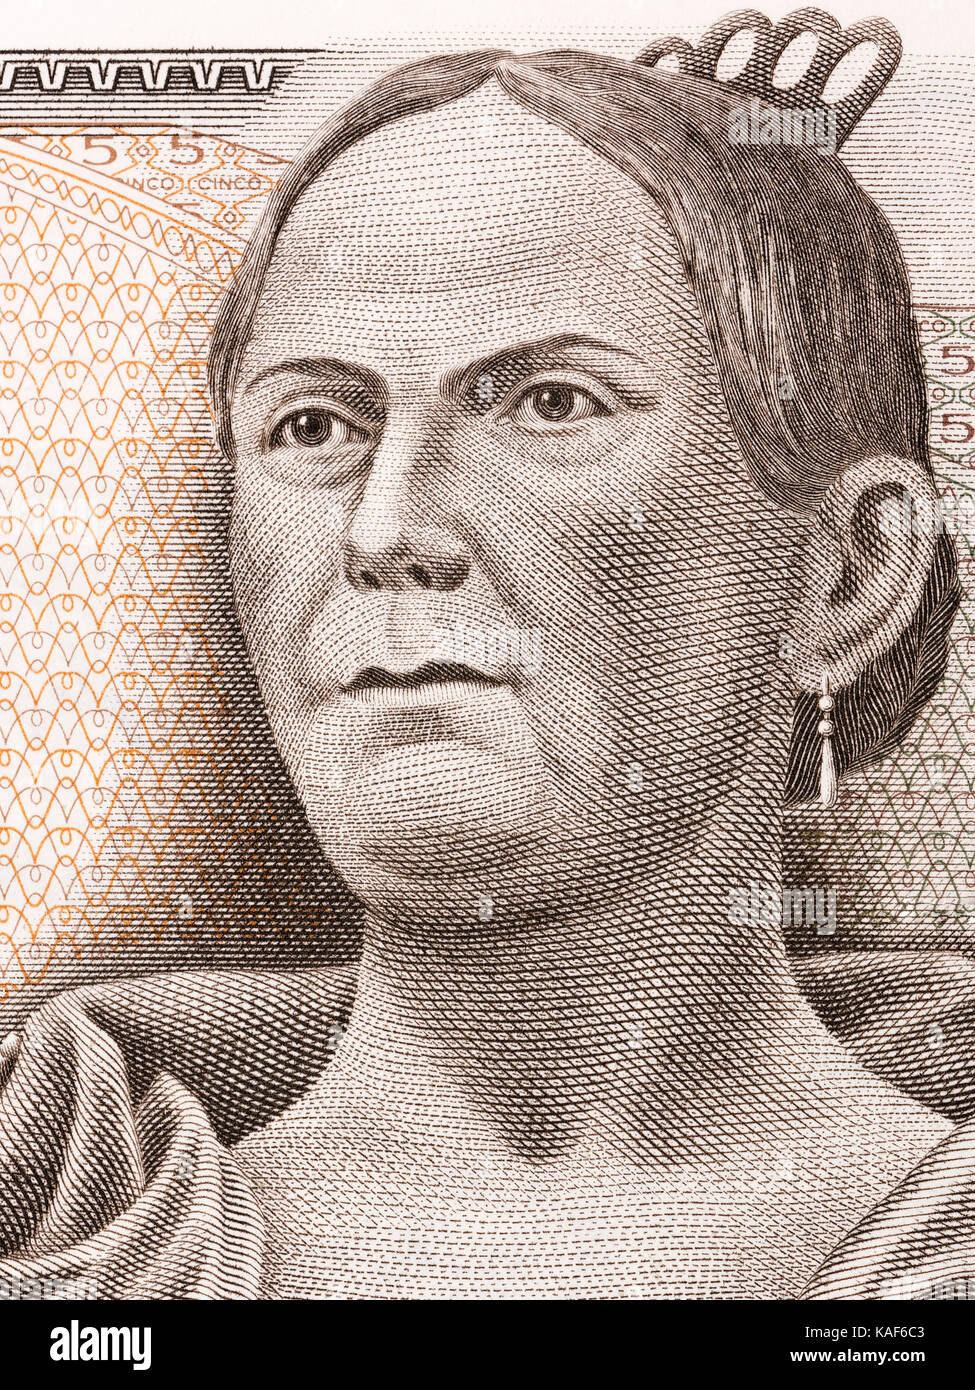 Josefa Ortiz de Domínguez - la Corregidora ritratto da pesos messicani Foto Stock